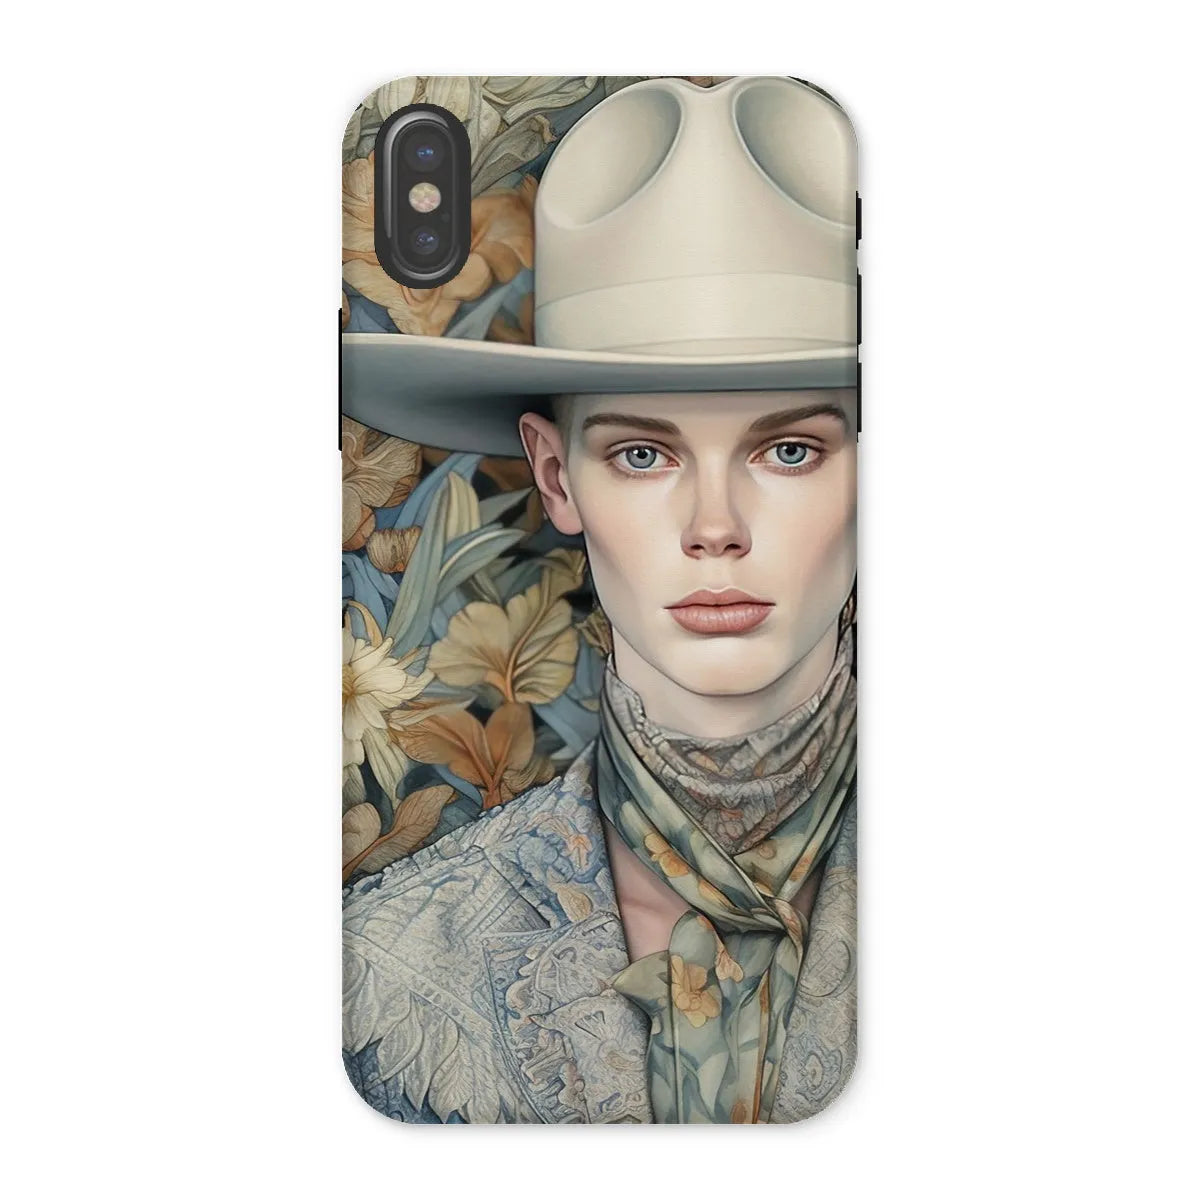 Jasper - Dandy Twink Cowboy Aesthetic Art Phone Case - Iphone x / Matte - Mobile Phone Cases - Aesthetic Art